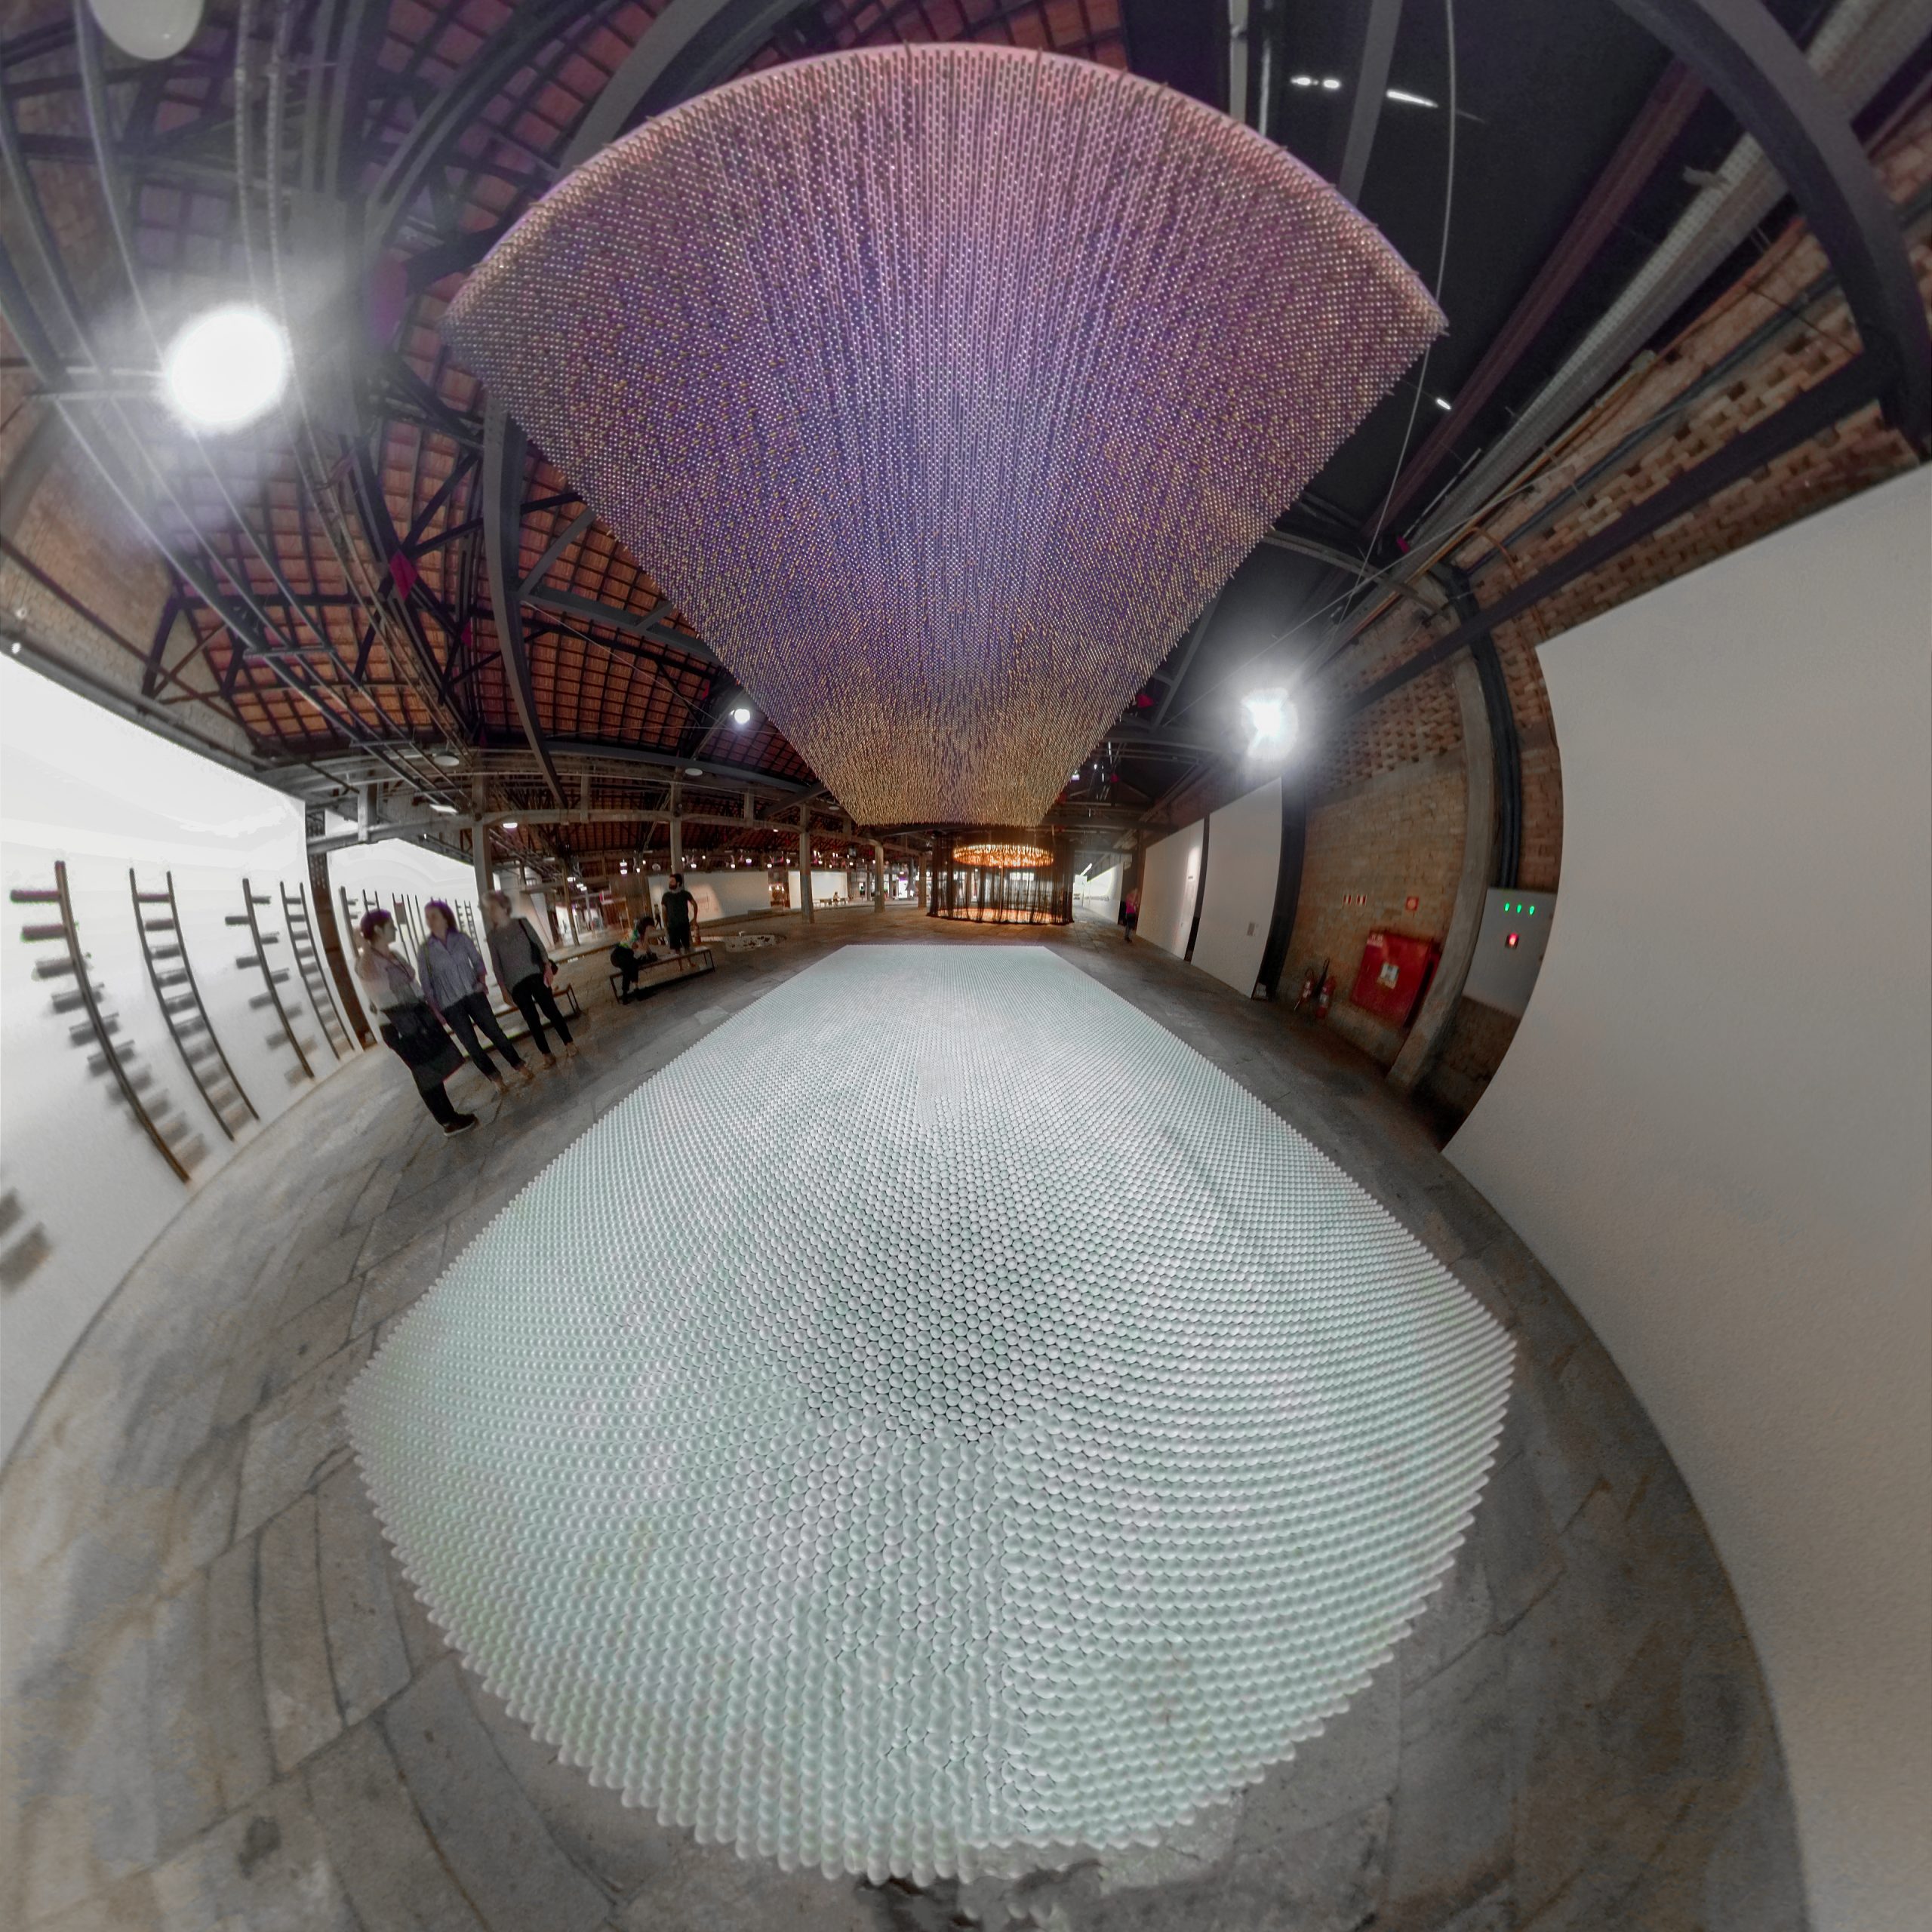 realidade virtual esta mudando o presente da arquitetura